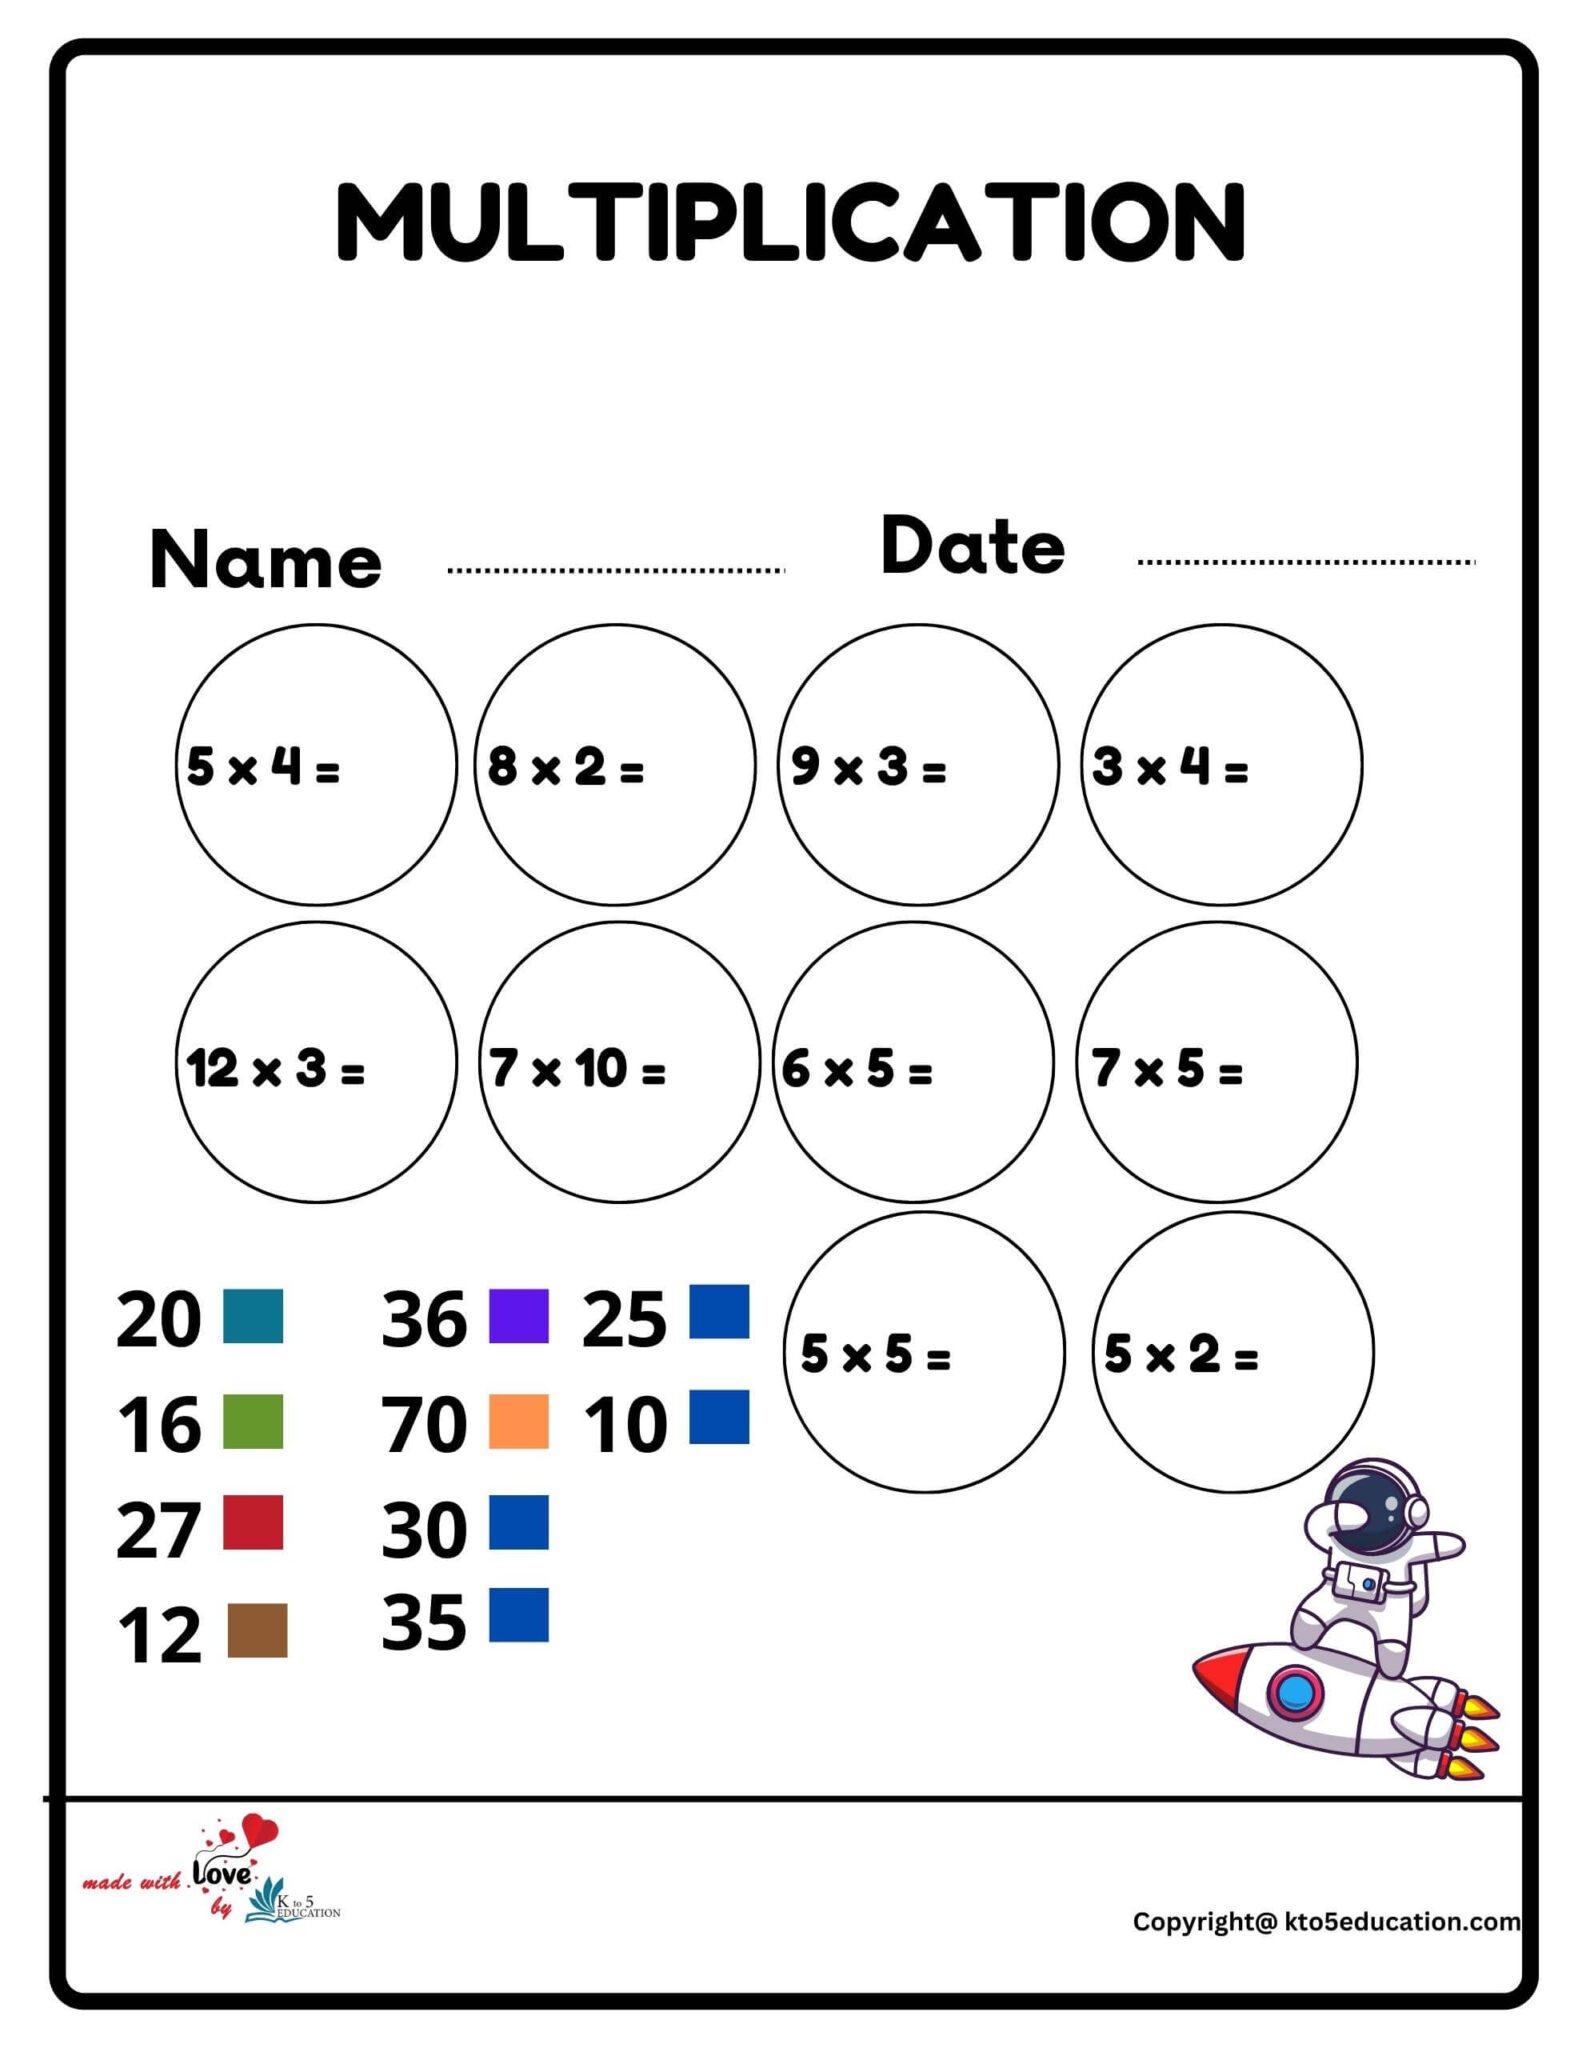 cross-multiplication-worksheets-99worksheets